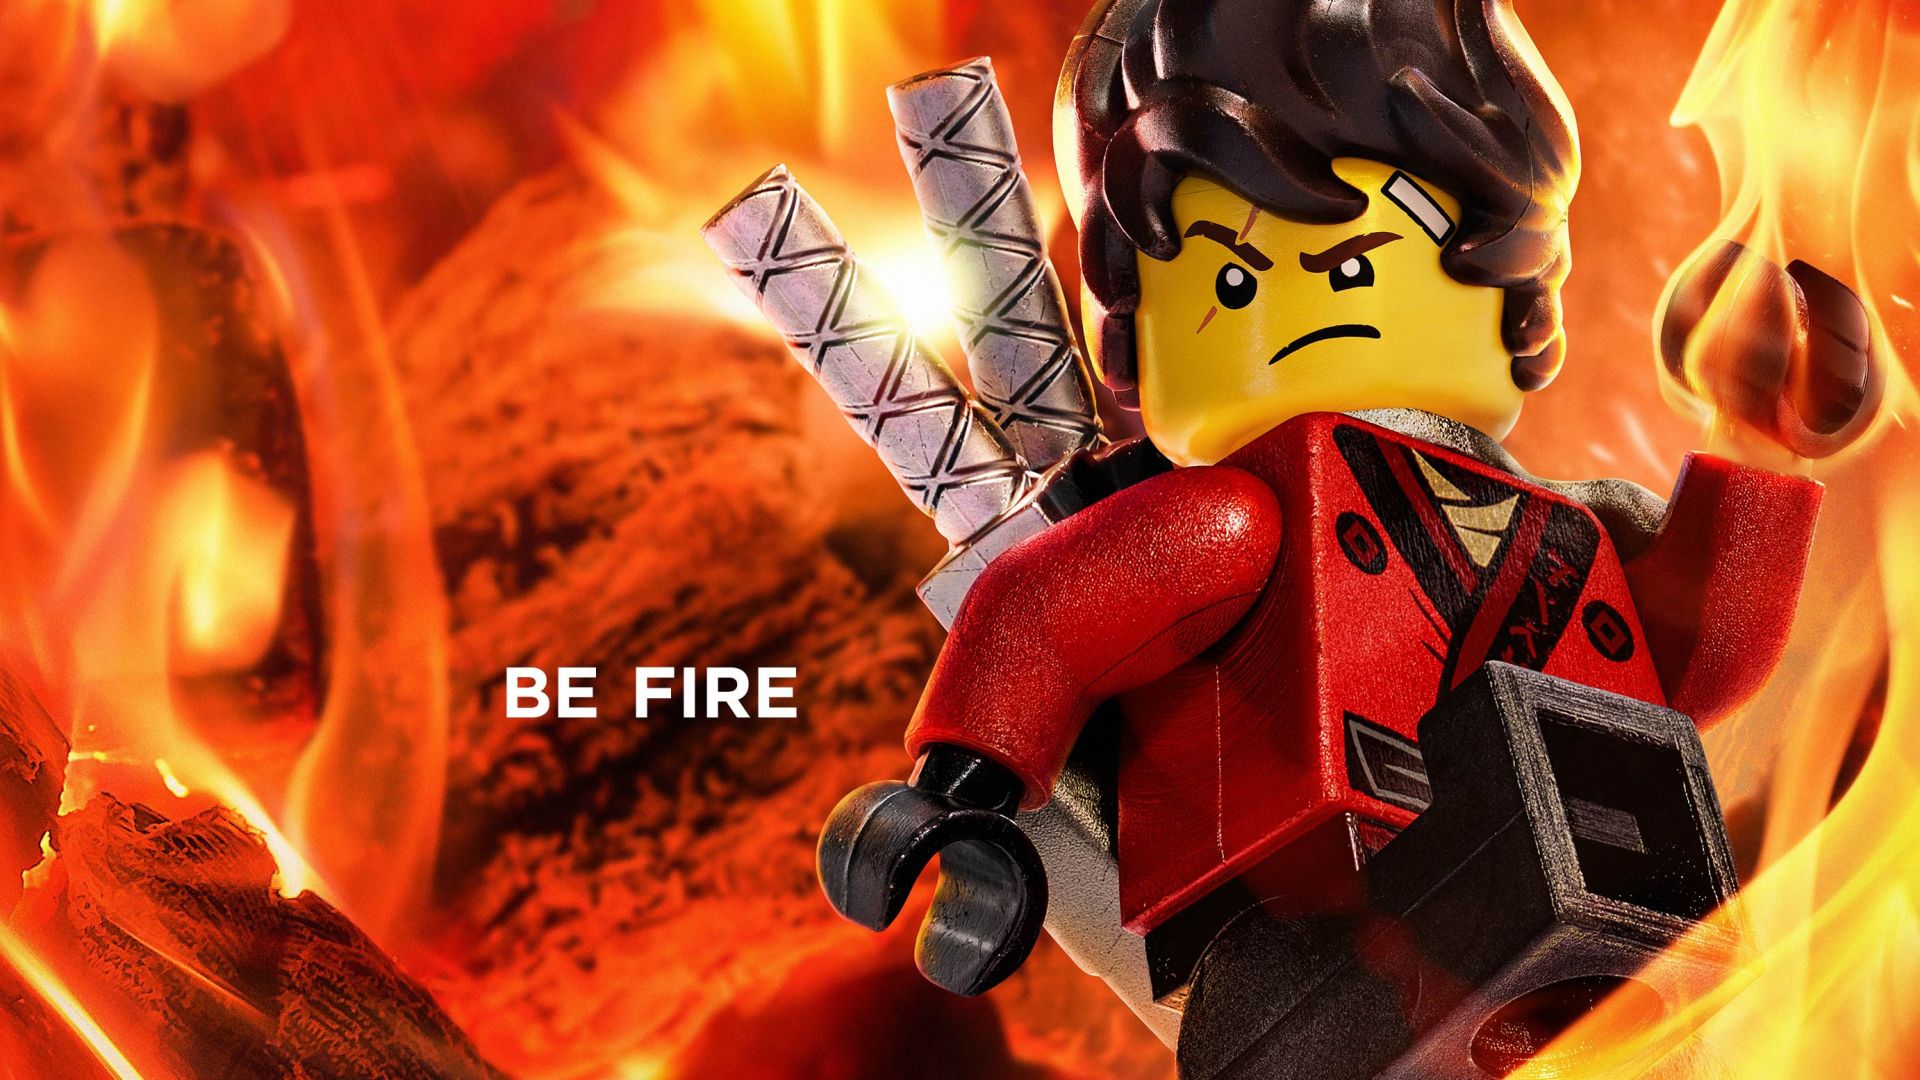 Лего Фильм: Ниндзяго, The LEGO Ninjago Movie, Be Fire, 4k (horizontal)